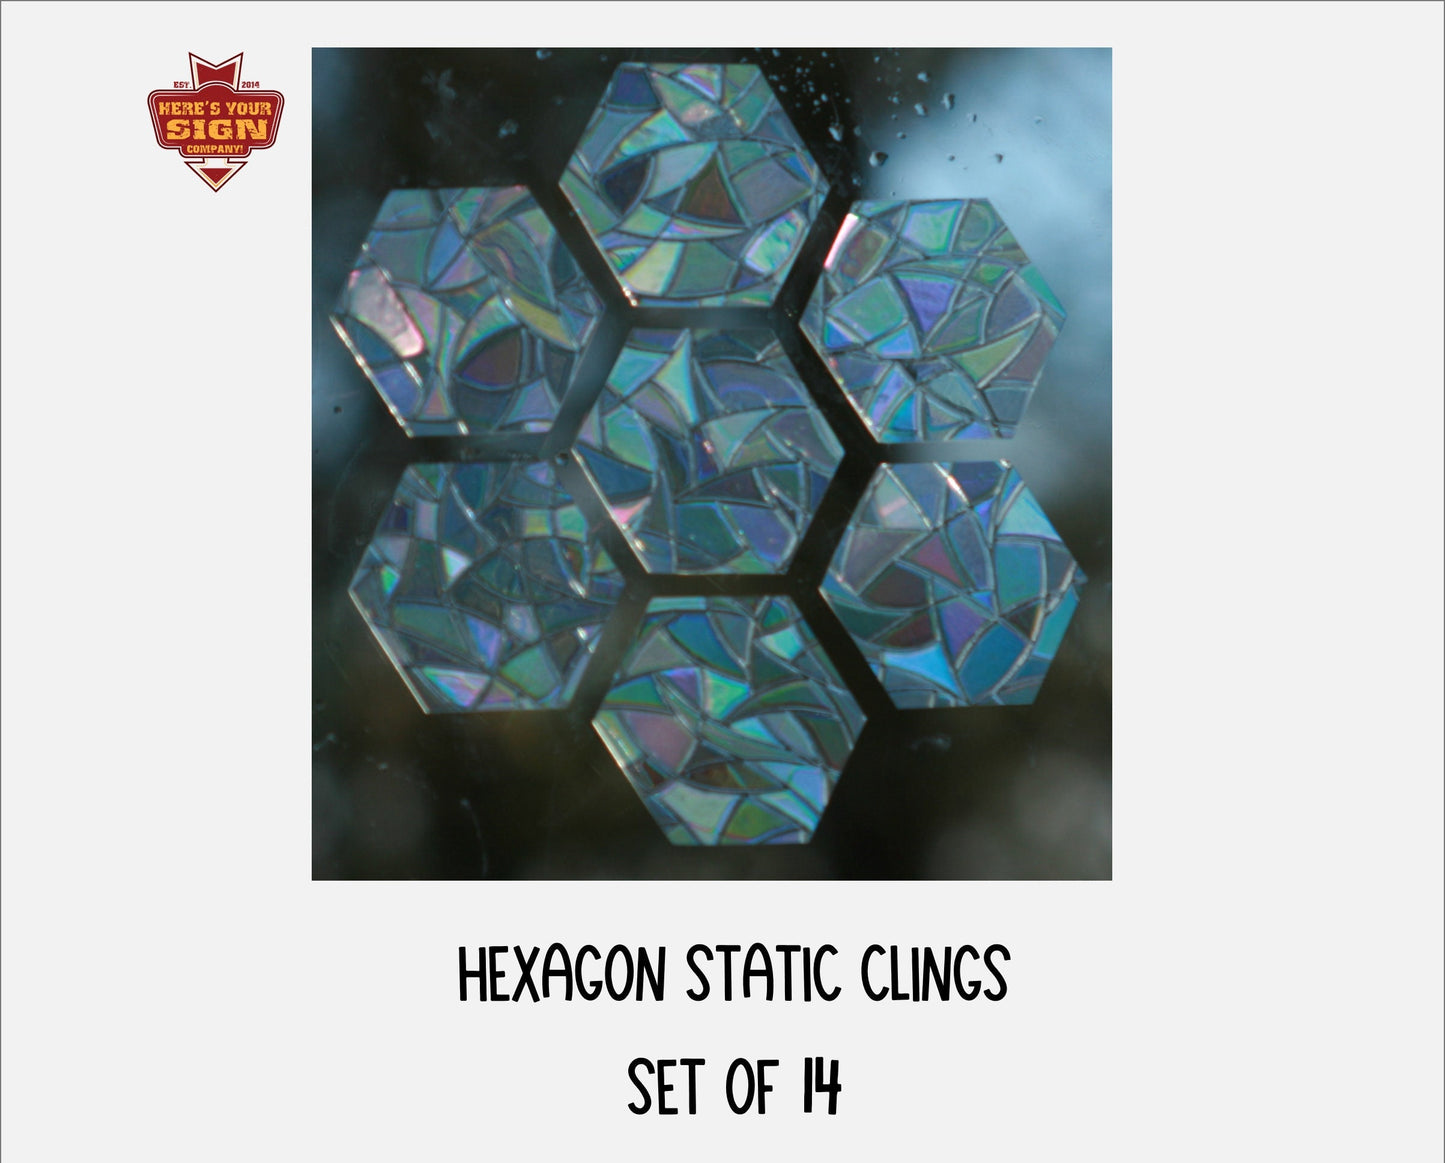 Hexagon 2.5" wide Shaped Window Clings. Set of 14